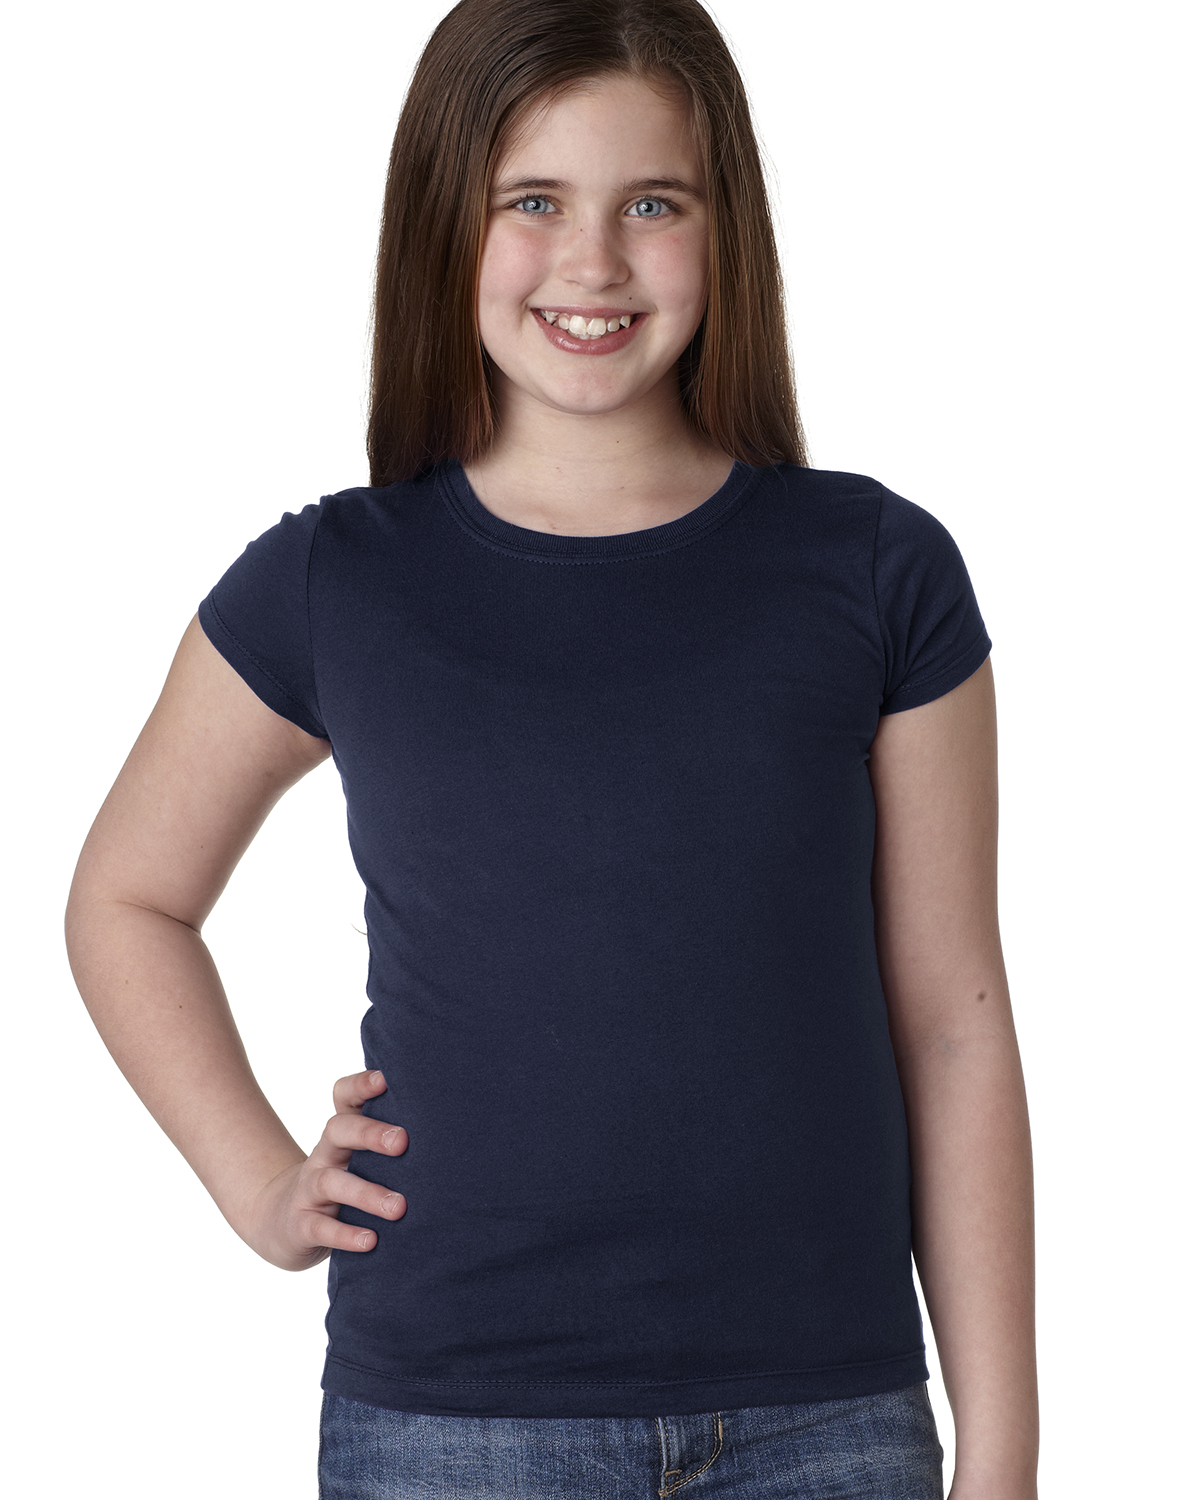 N3710 Next Level Youth Girls’ Princess T-Shirt